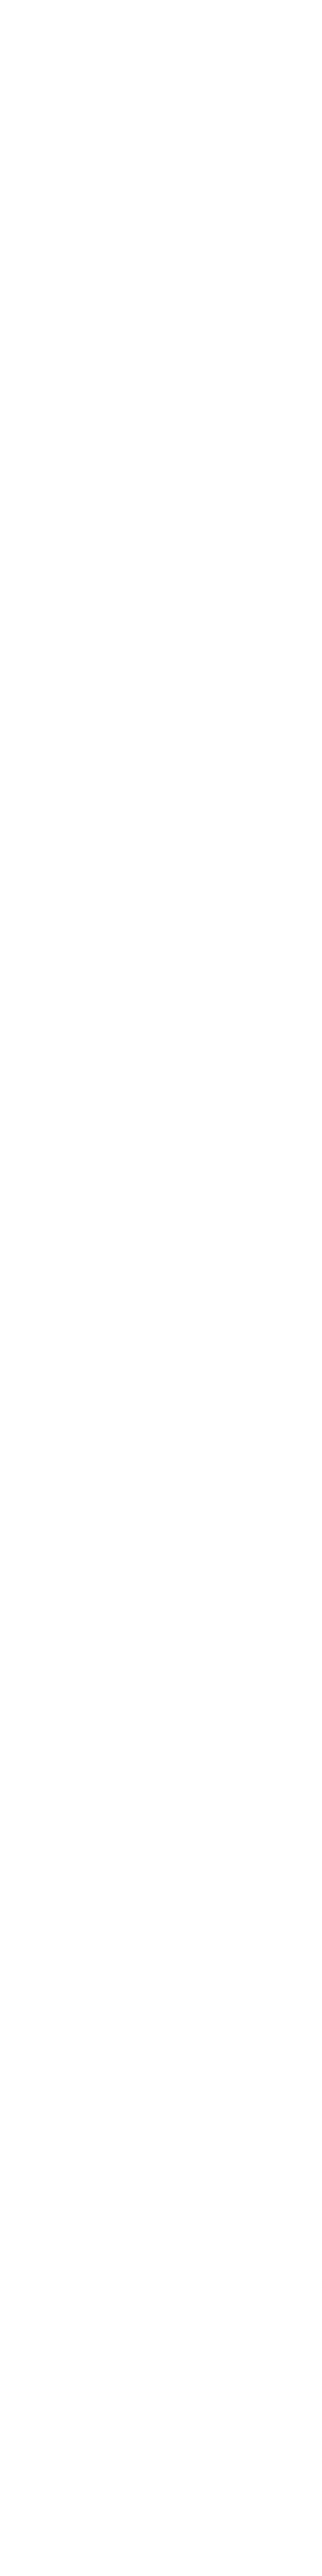 grid-de-logos-3-x8_01